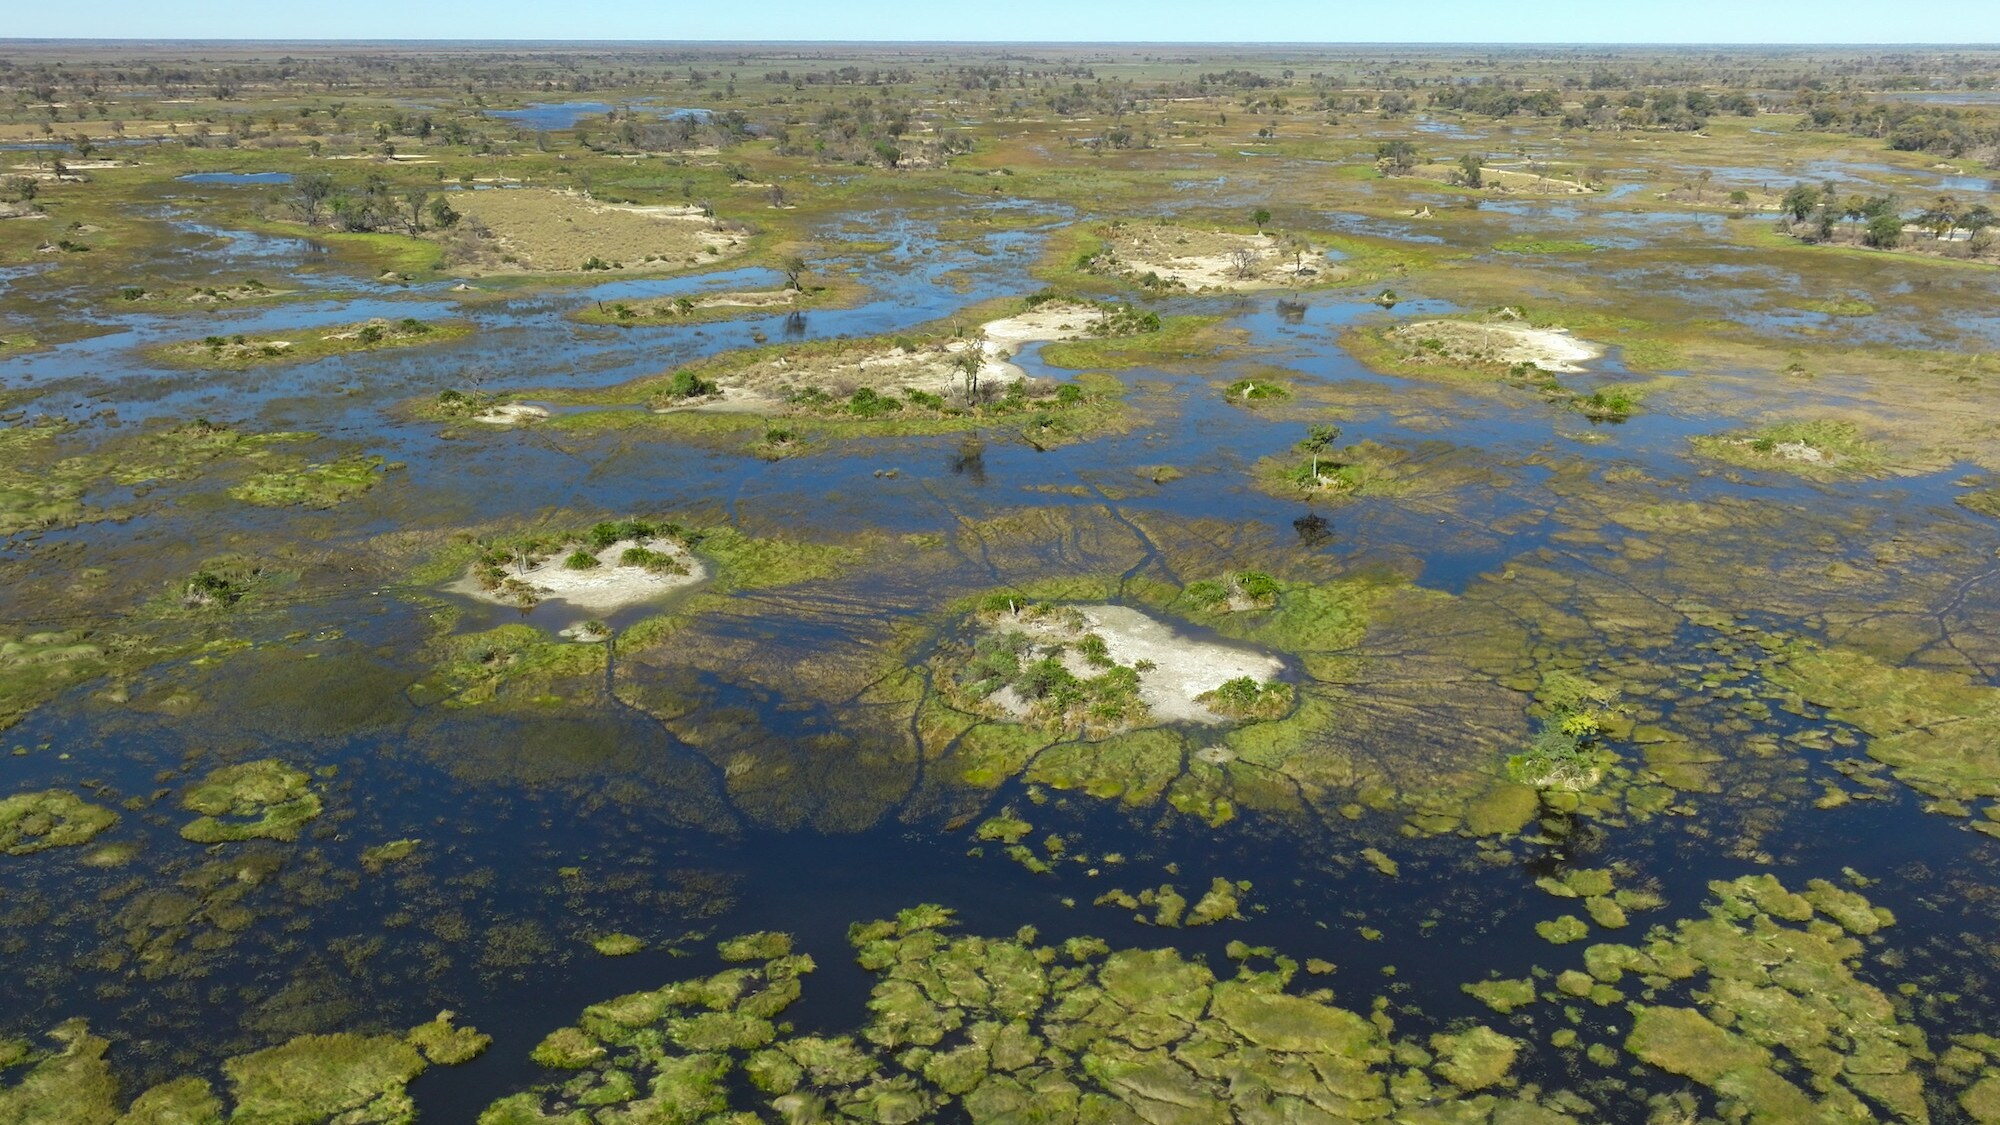 Flooded plains of Okavango Delta. (National Geographic for Disney+/Bertie Gregory)